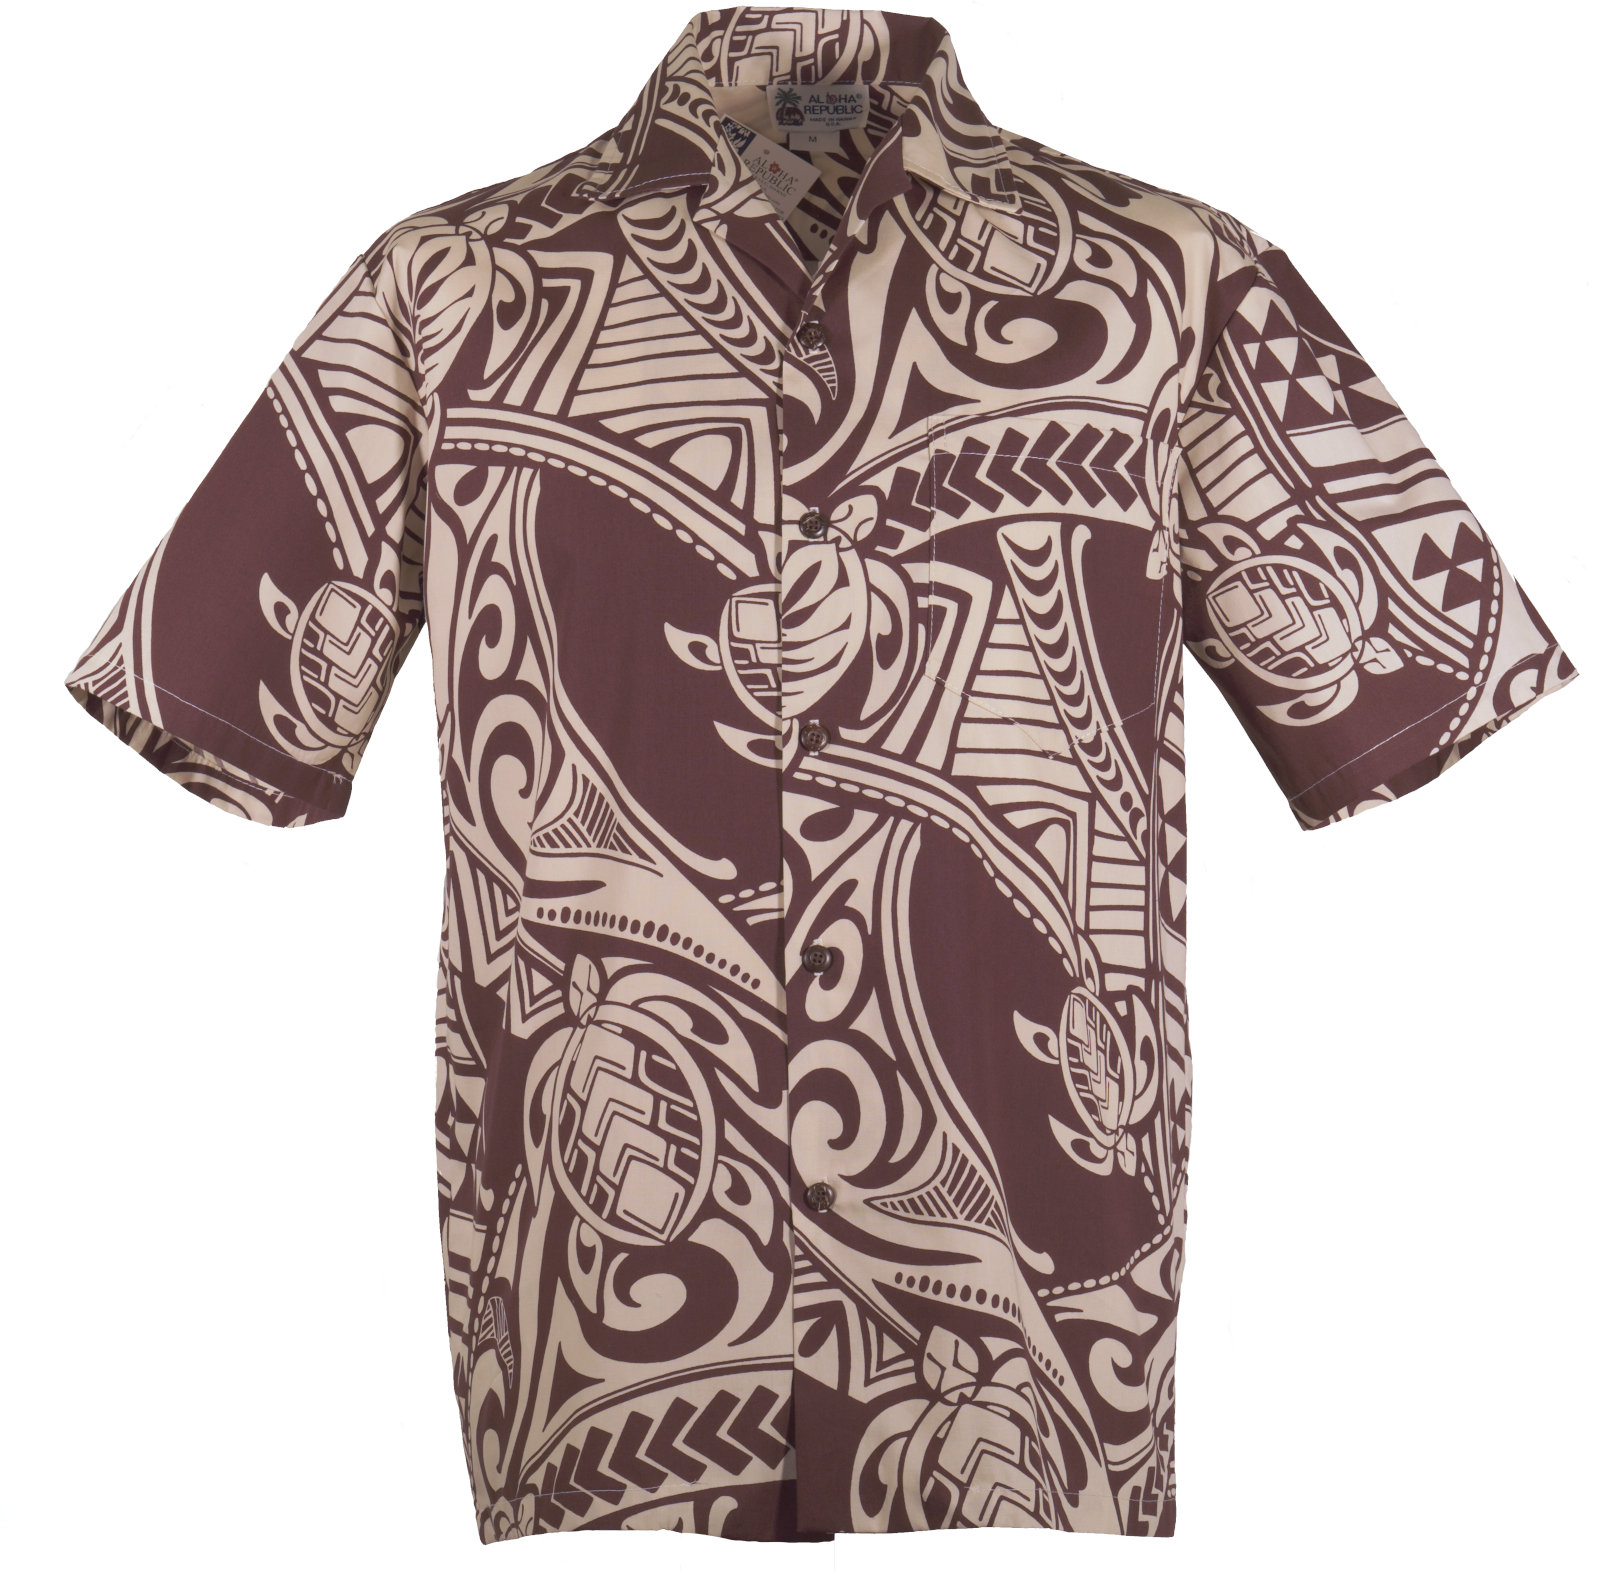 Original Hawaiihemd -Mighty Honu-